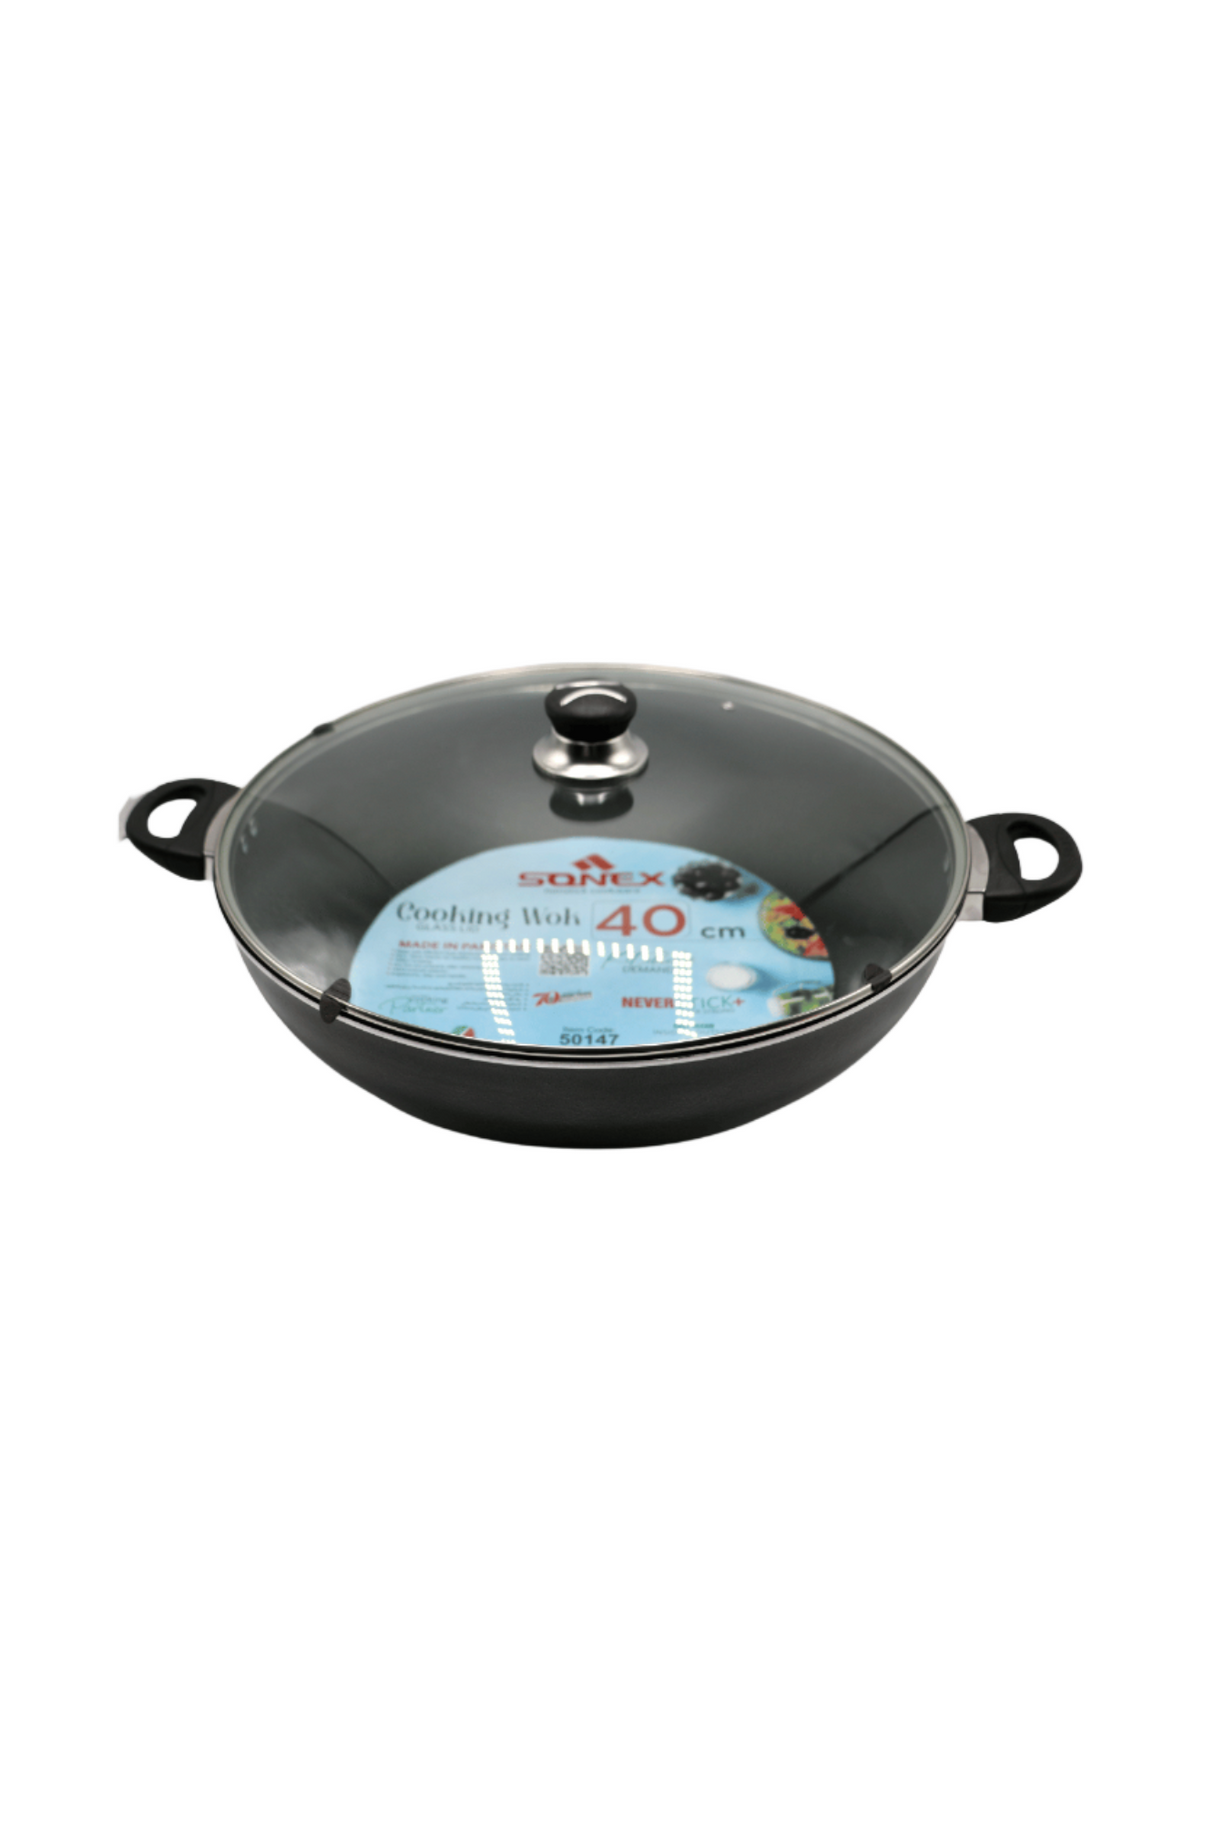 sonex ns cooking wok 40cm 50147